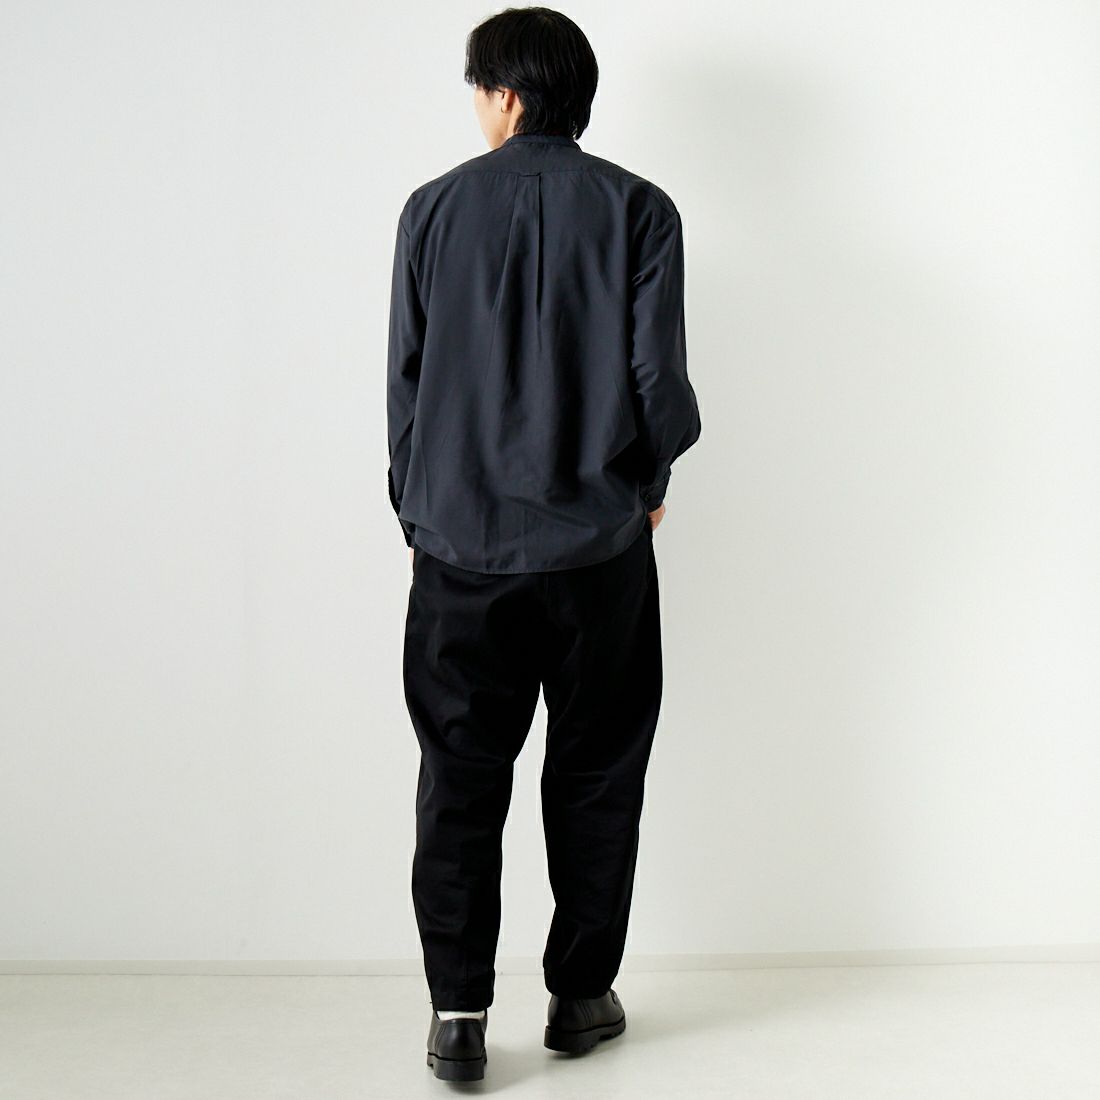 Jeans Factory Clothes [ジーンズファクトリークローズ] ロングスリーブ テックリネンバンドカラーシャツ [EPC-41100] 6 CHARCOAL &&モデル身長：179cm 着用サイズ：L&&